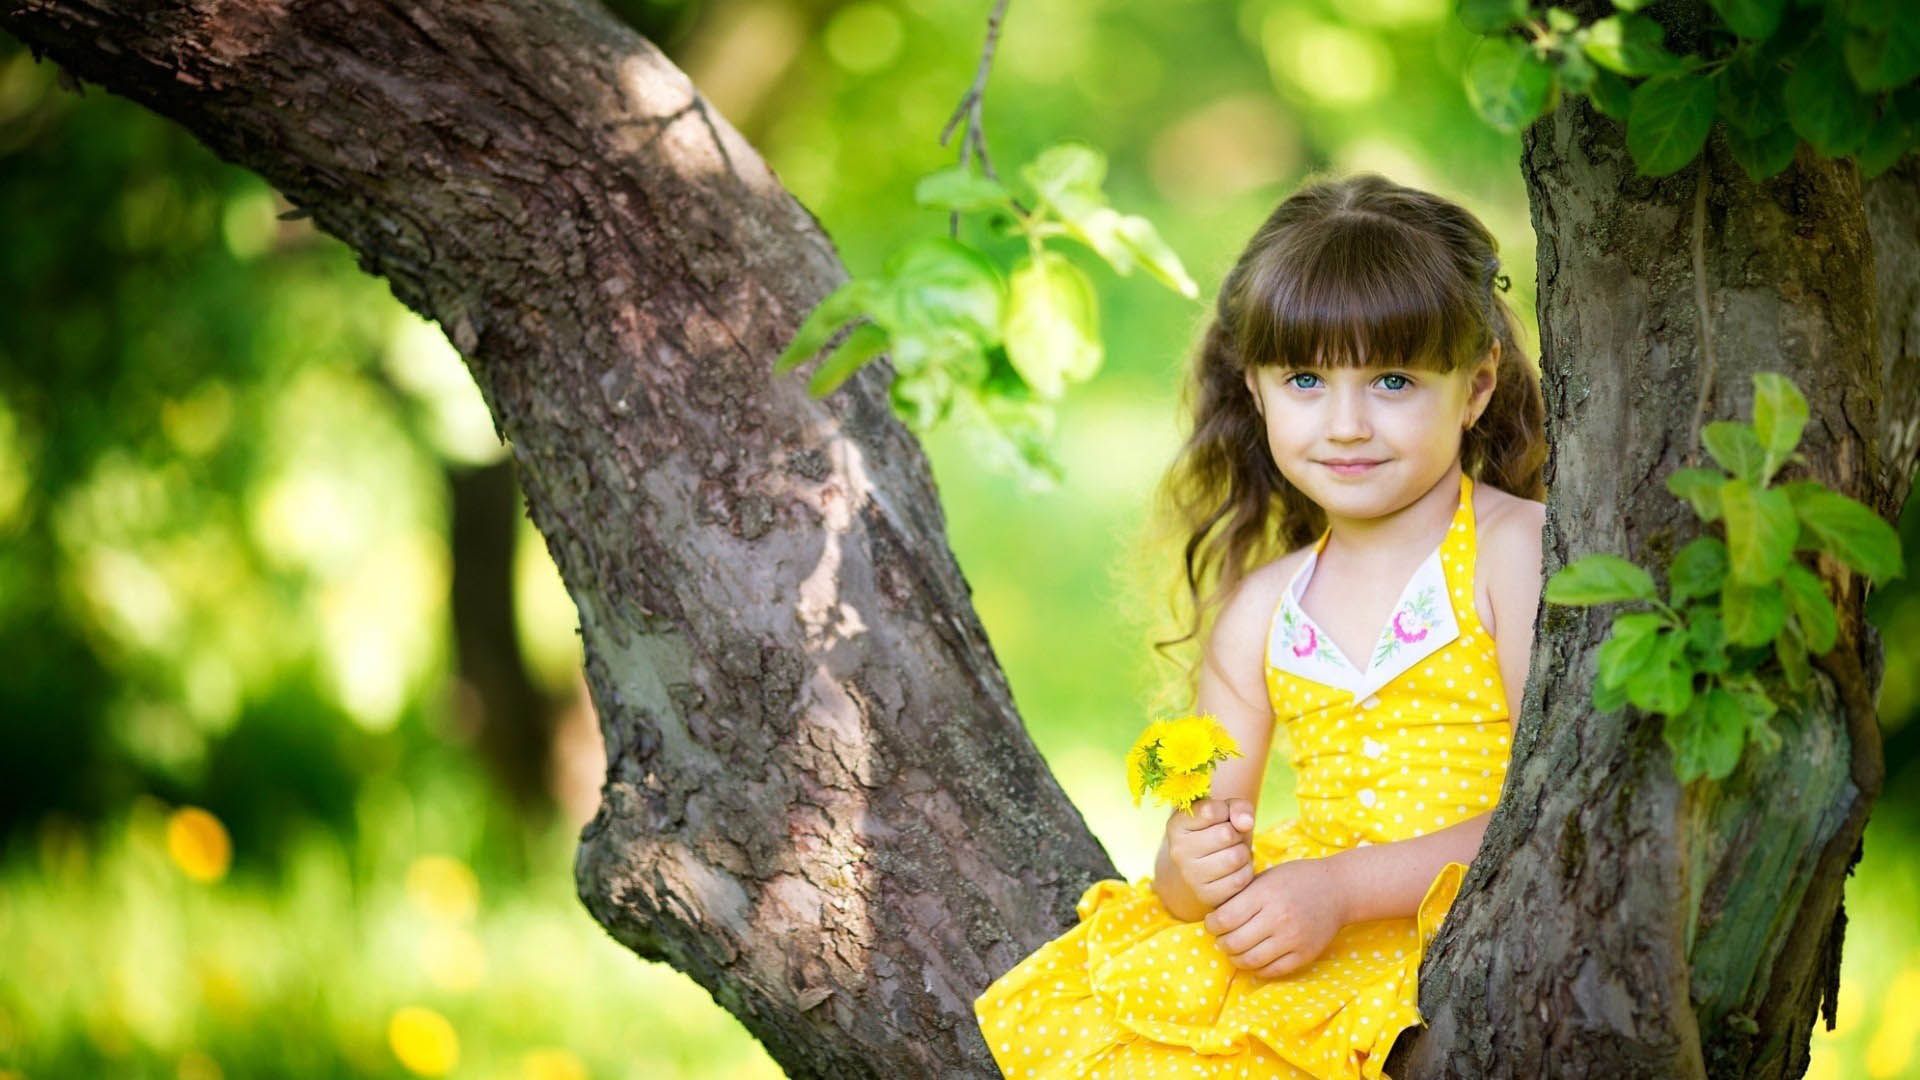 Cute baby girl in yellow dress